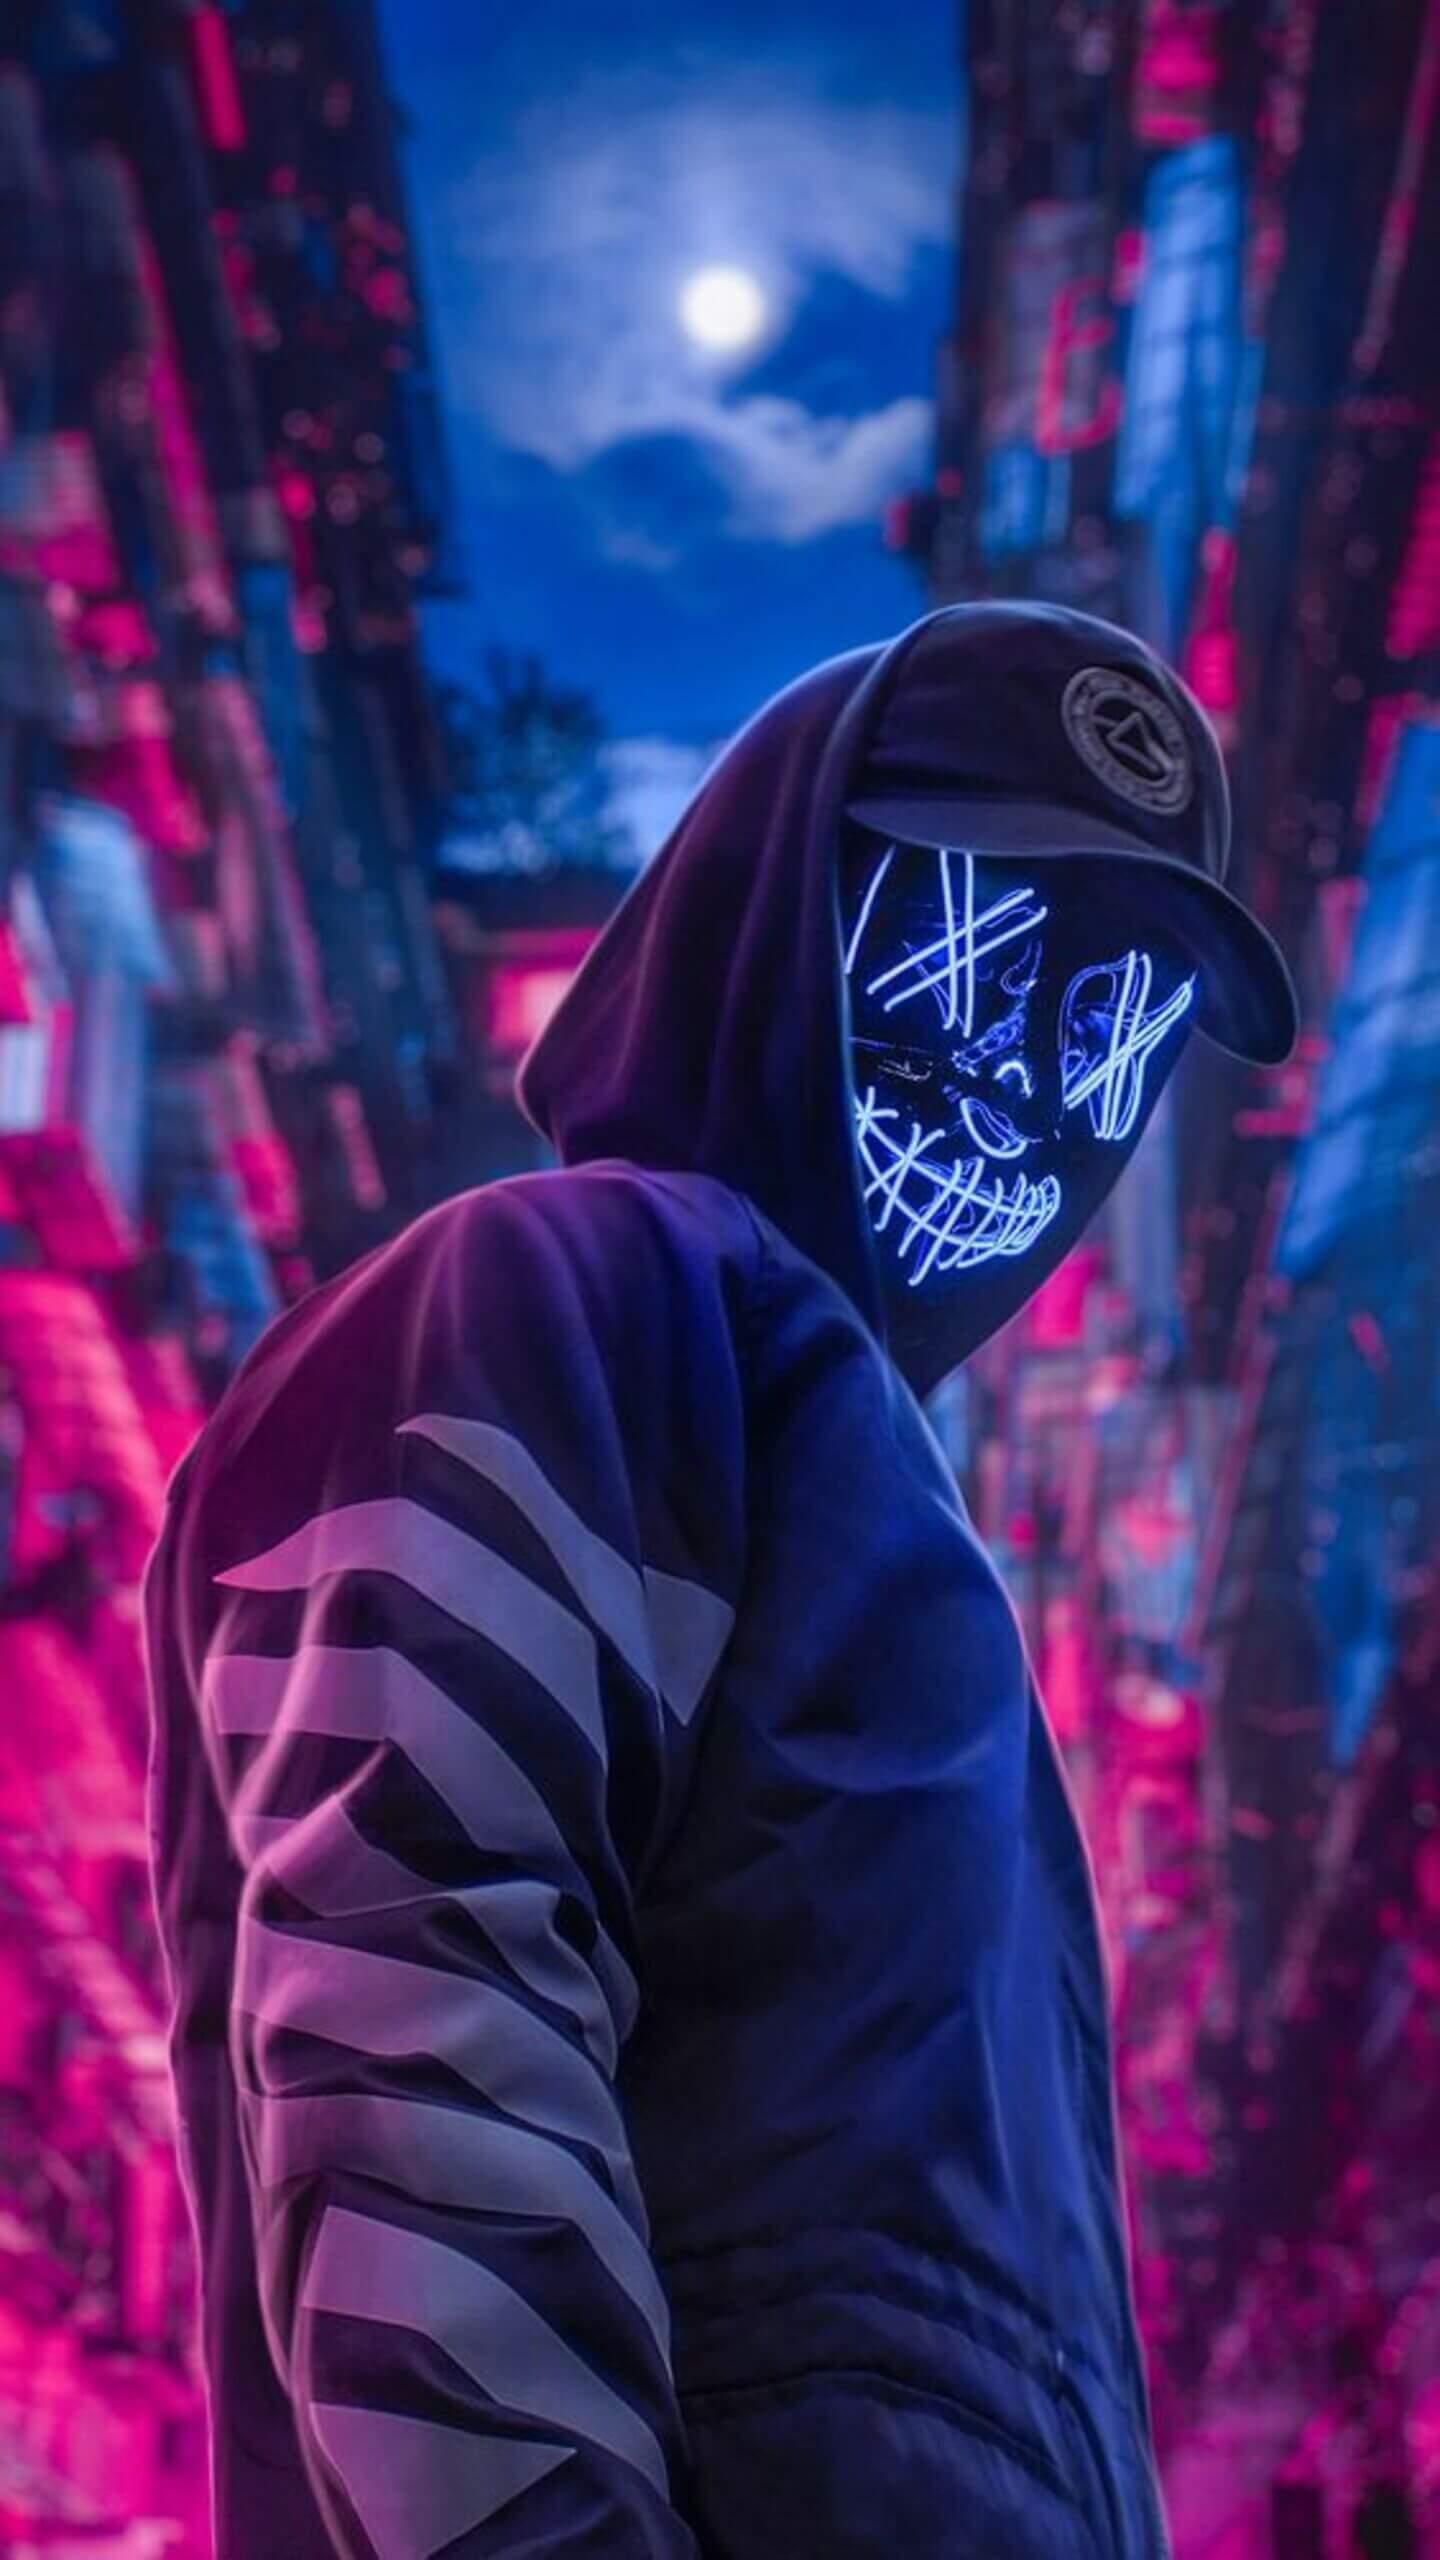 Wallpaper Neon Mask Guy, Mask, Led Purge Mask, Gas Mask, Cloud, Background  - Download Free Image